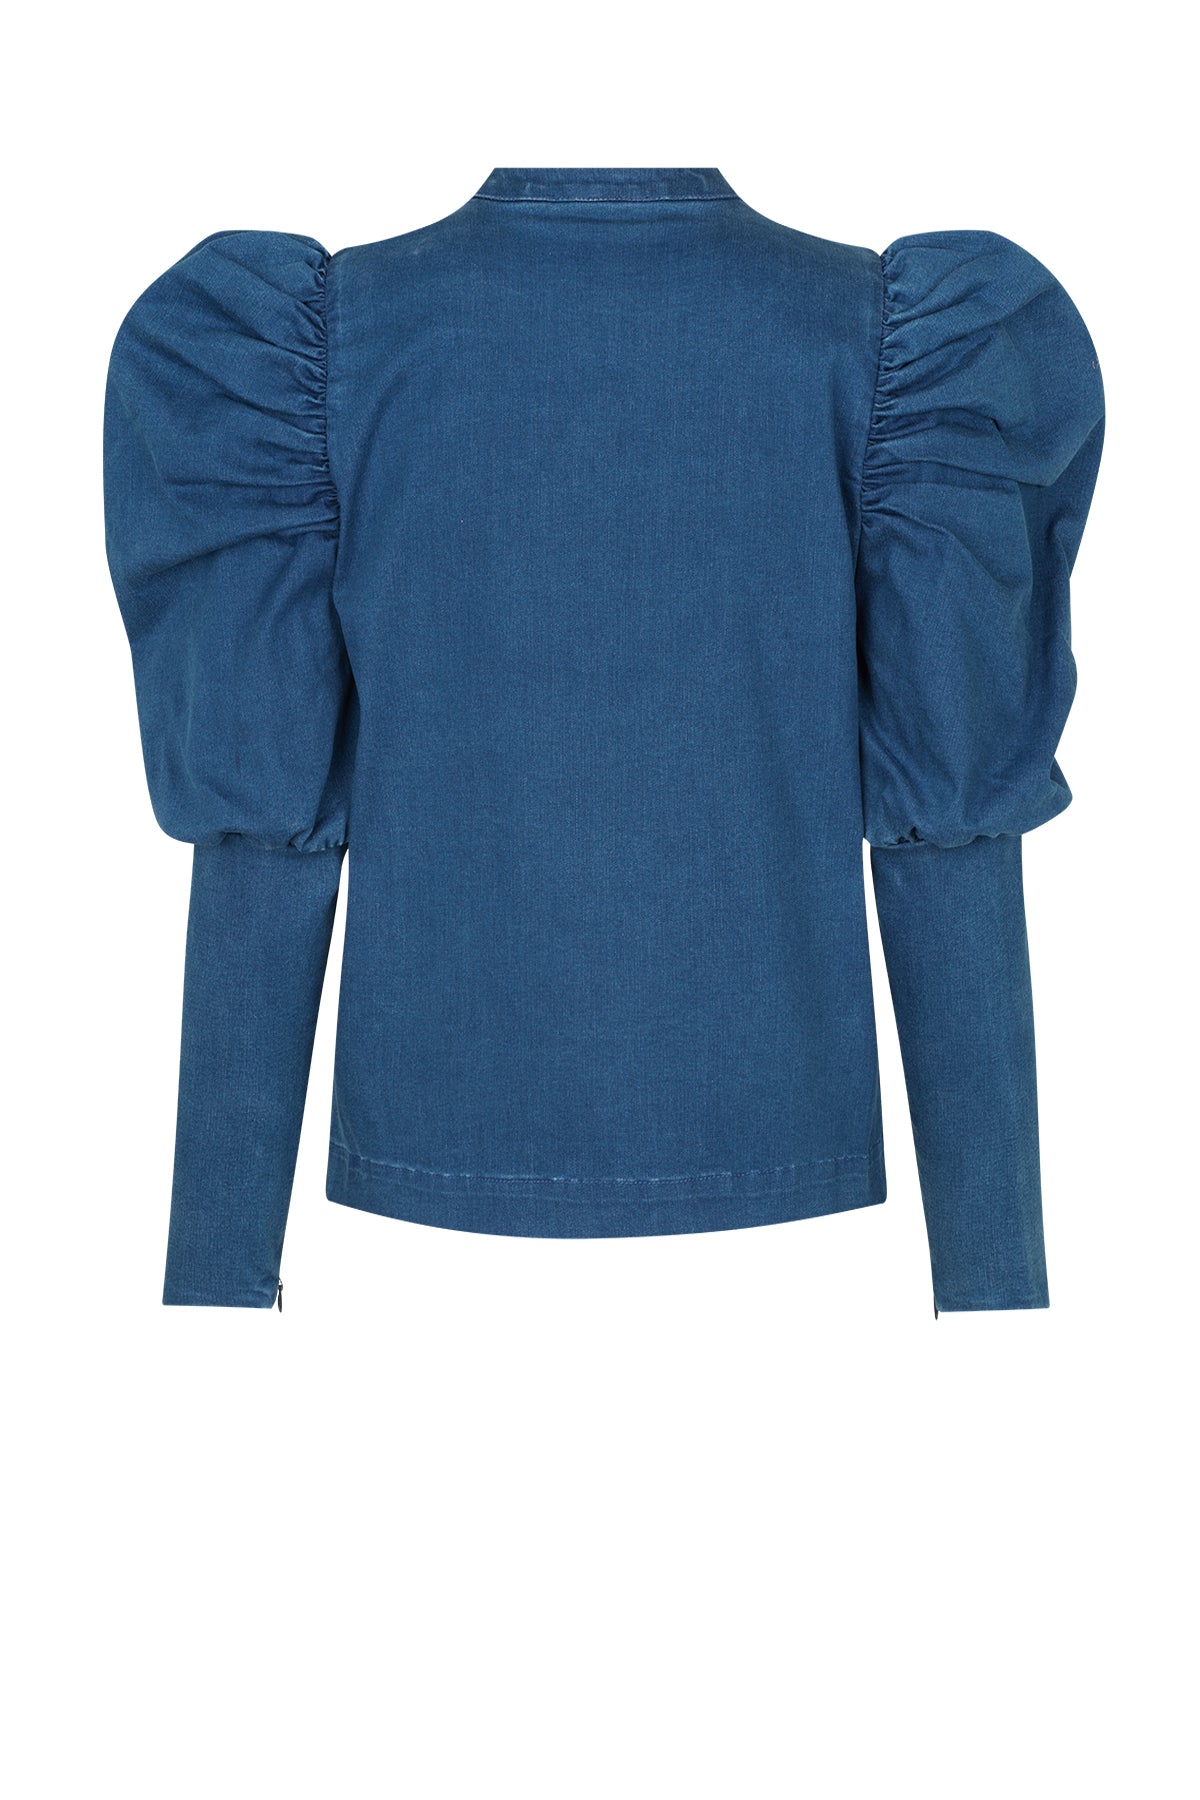 CRAS Molly Shirt Shirt Blue - Medival blue